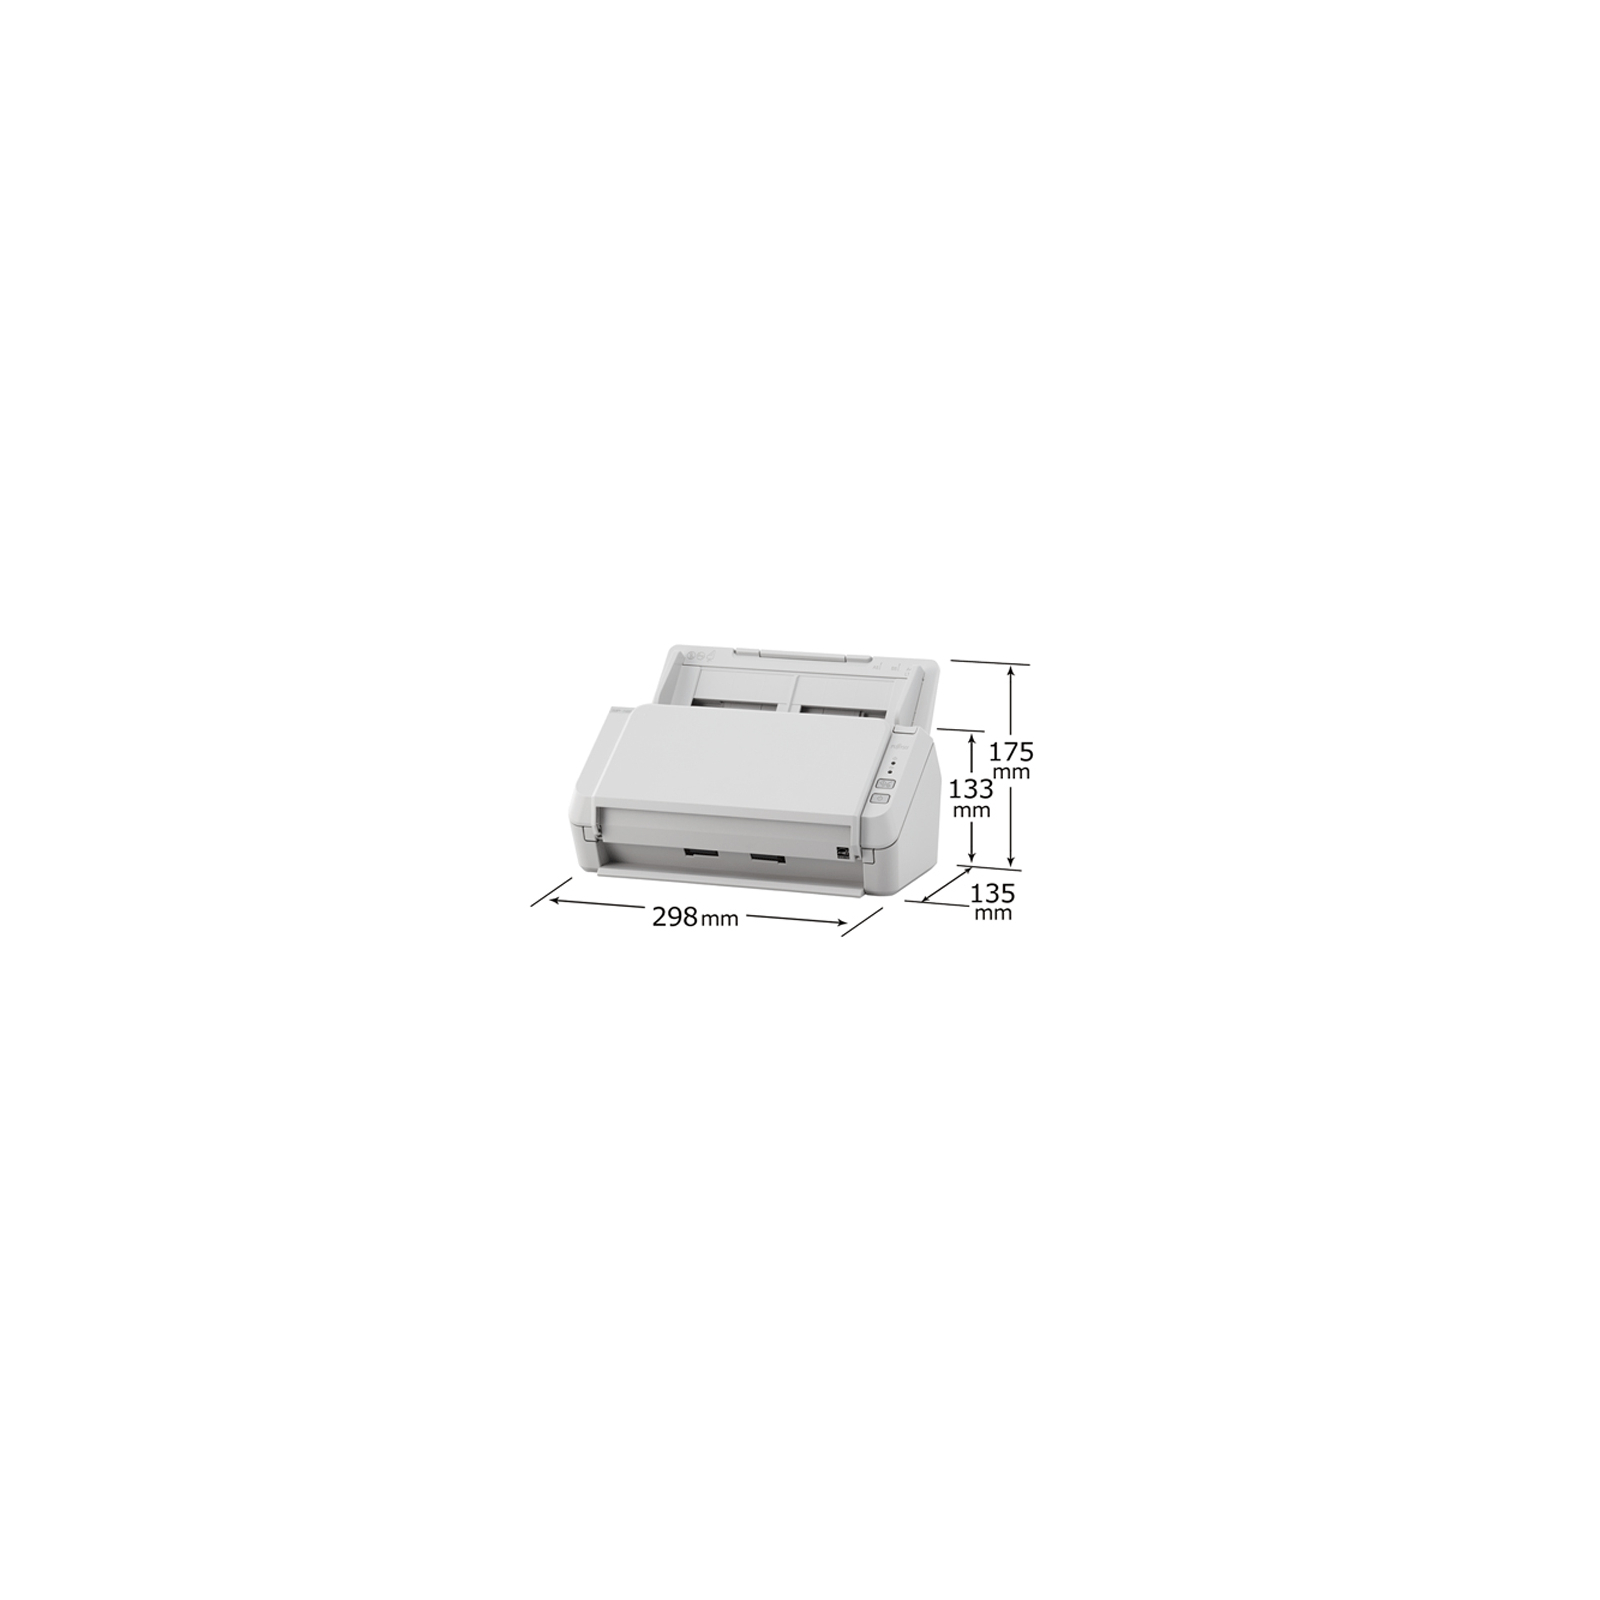 Сканер Fujitsu SP-1120 (PA03708-B001) зображення 6